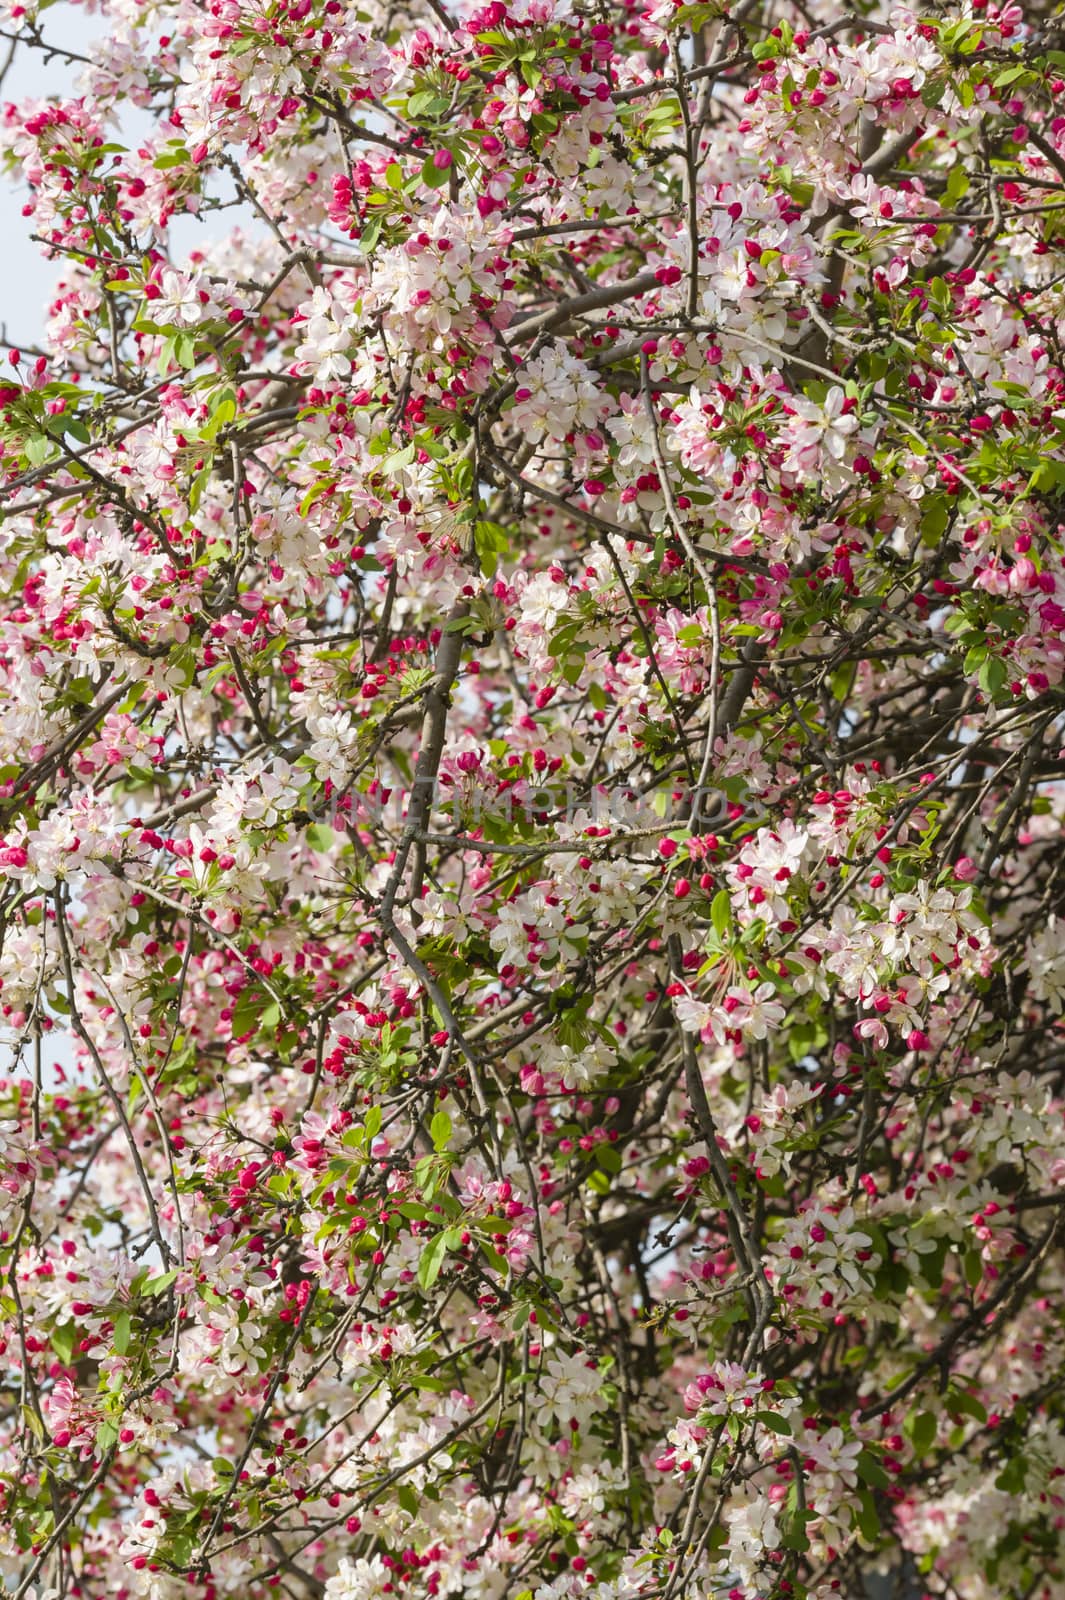 Cherry blossom flowers in full bloom in Spring